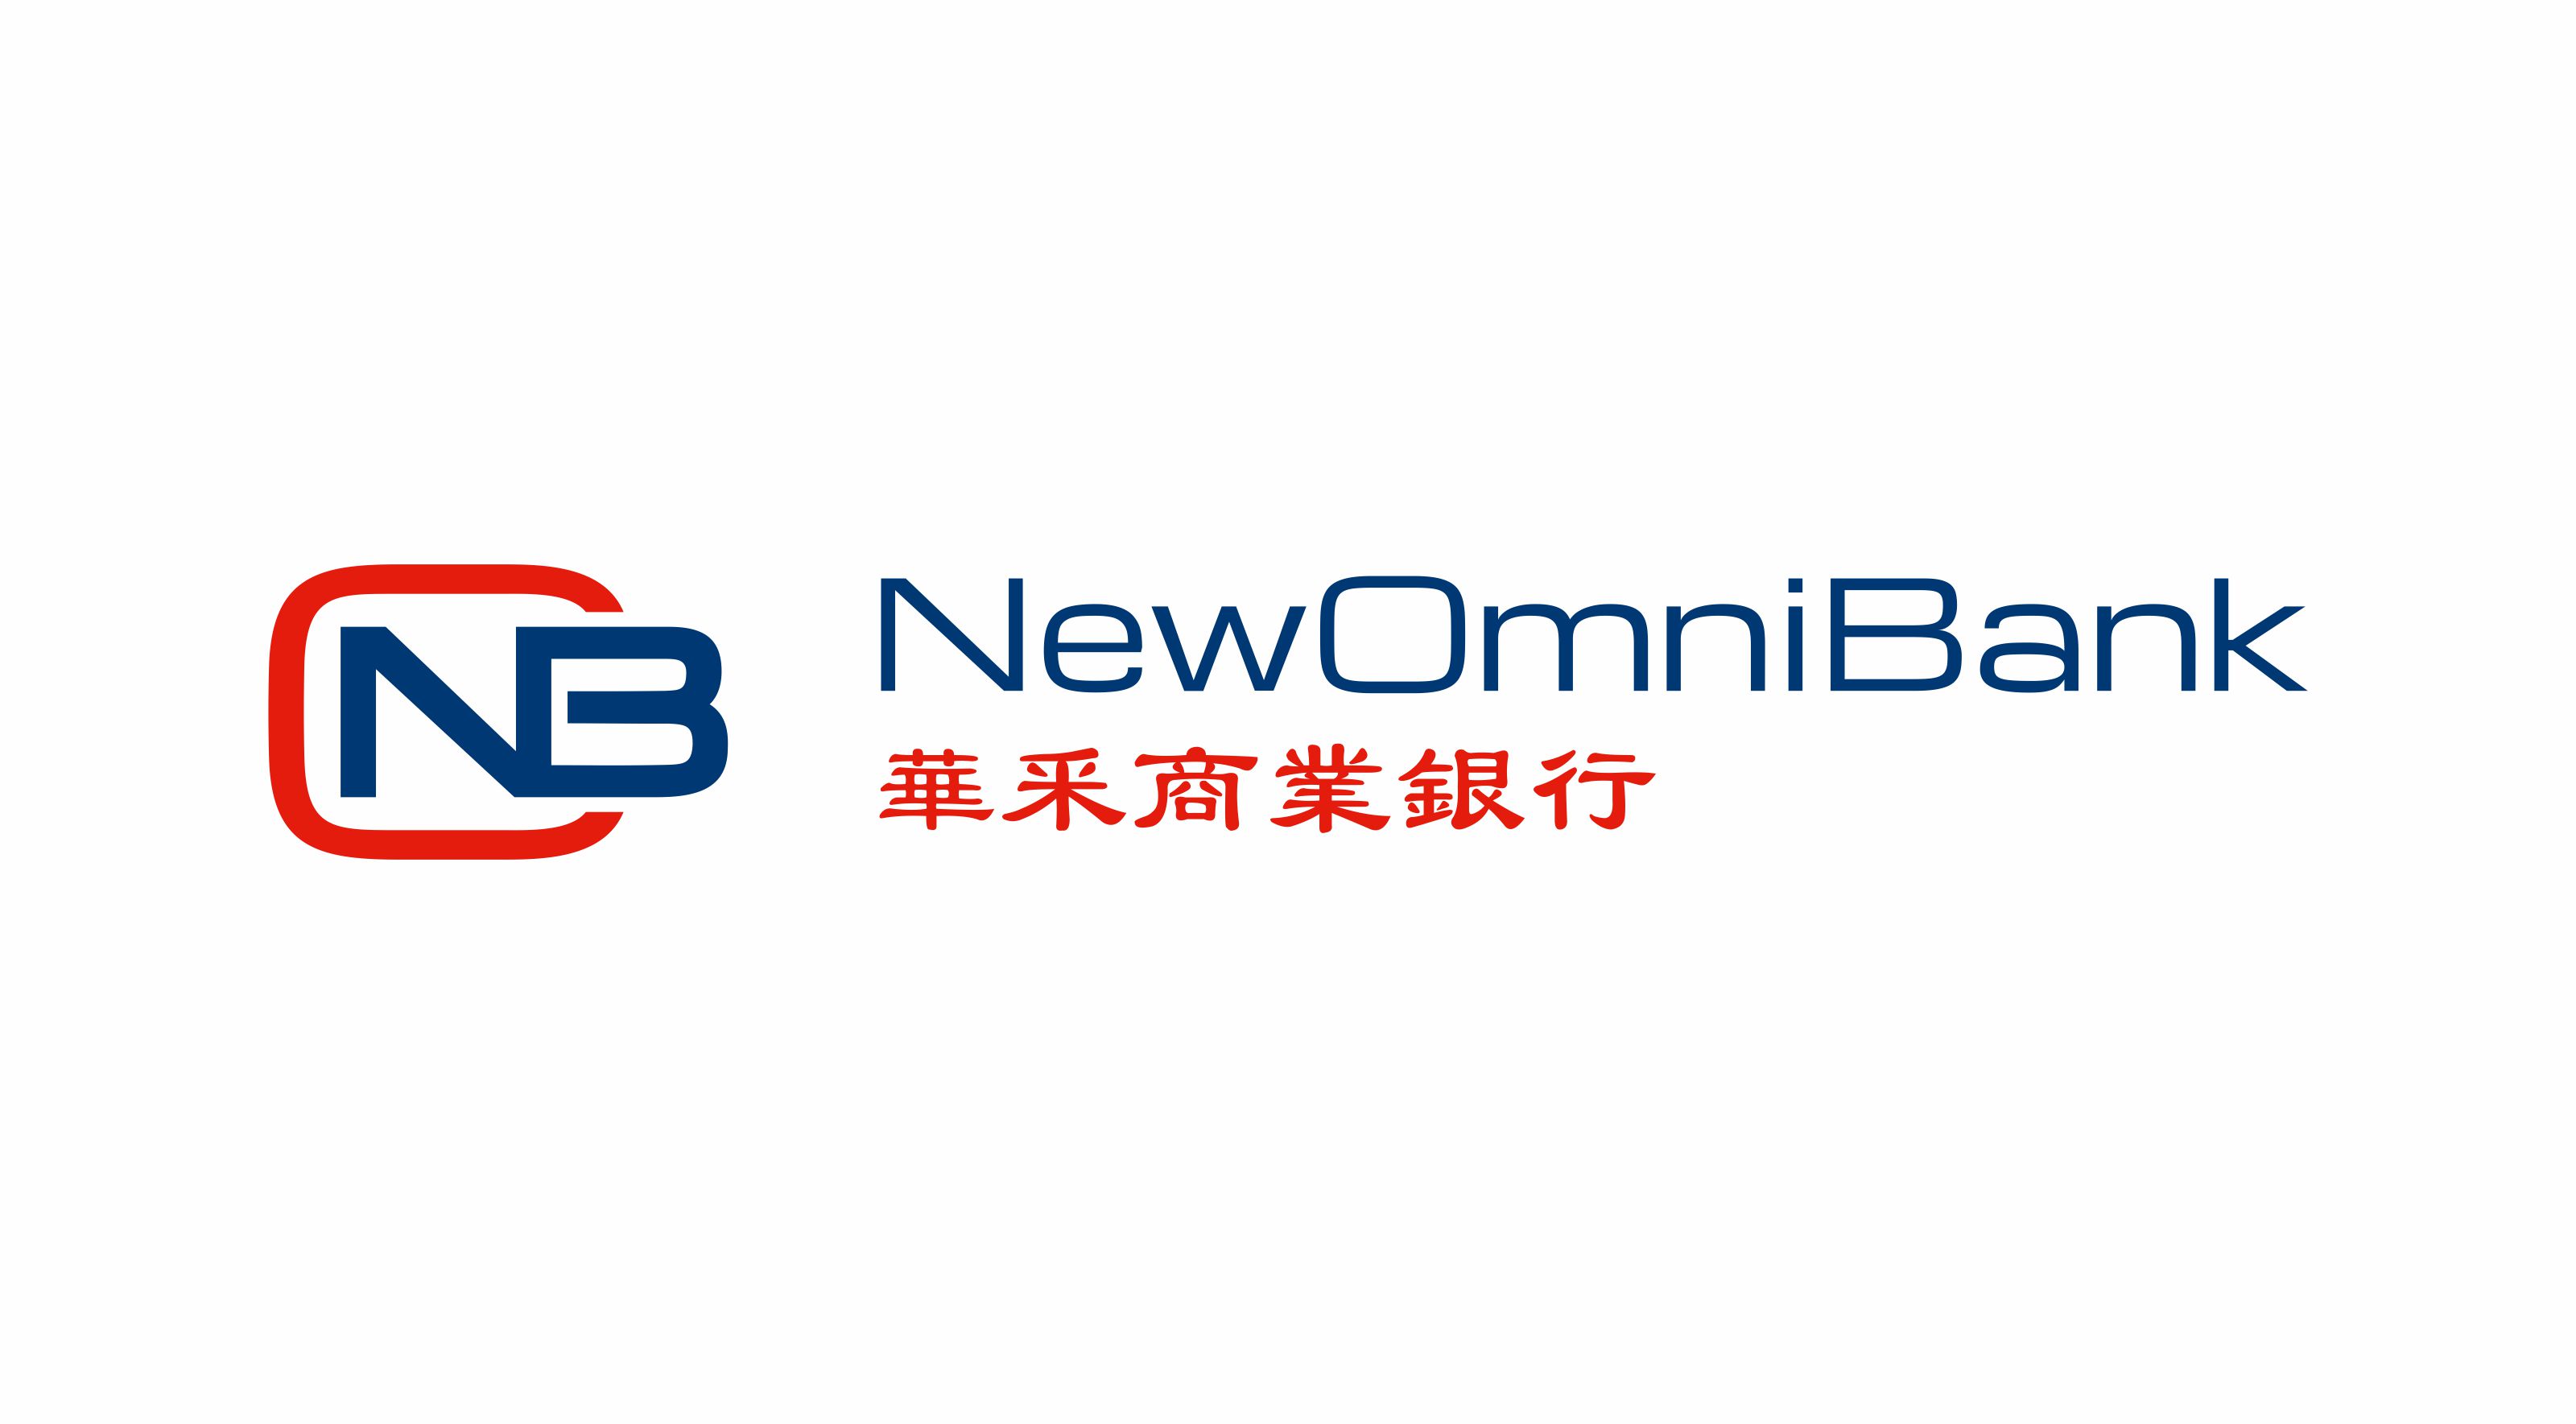 New Omni Bank